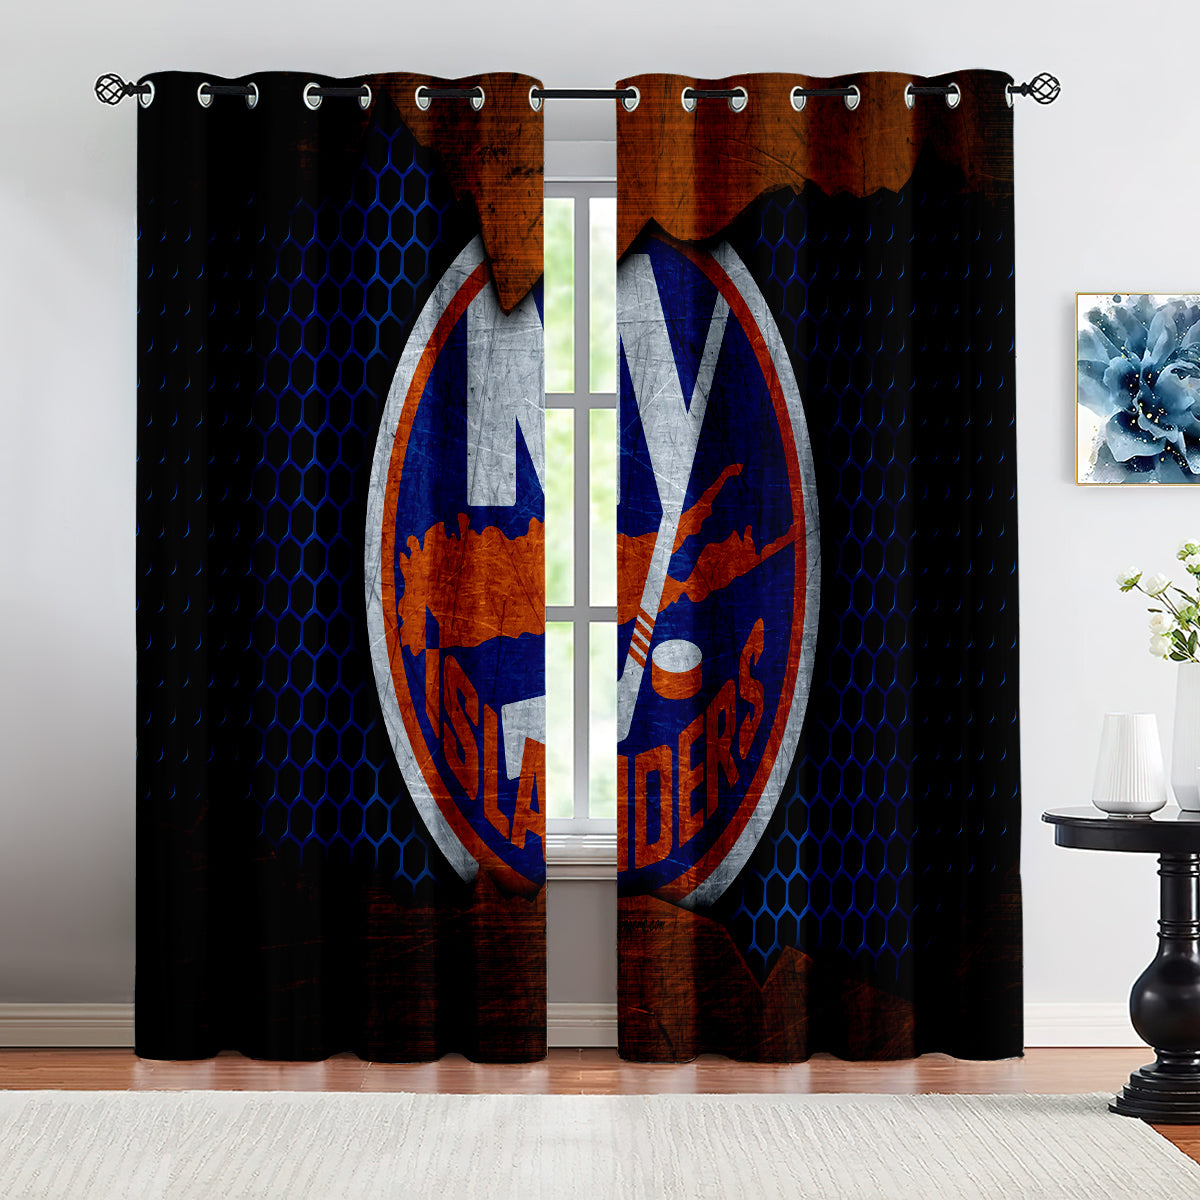 New YorkIslanders Hockey League Blackout Curtains Drapes For Window Treatment Set